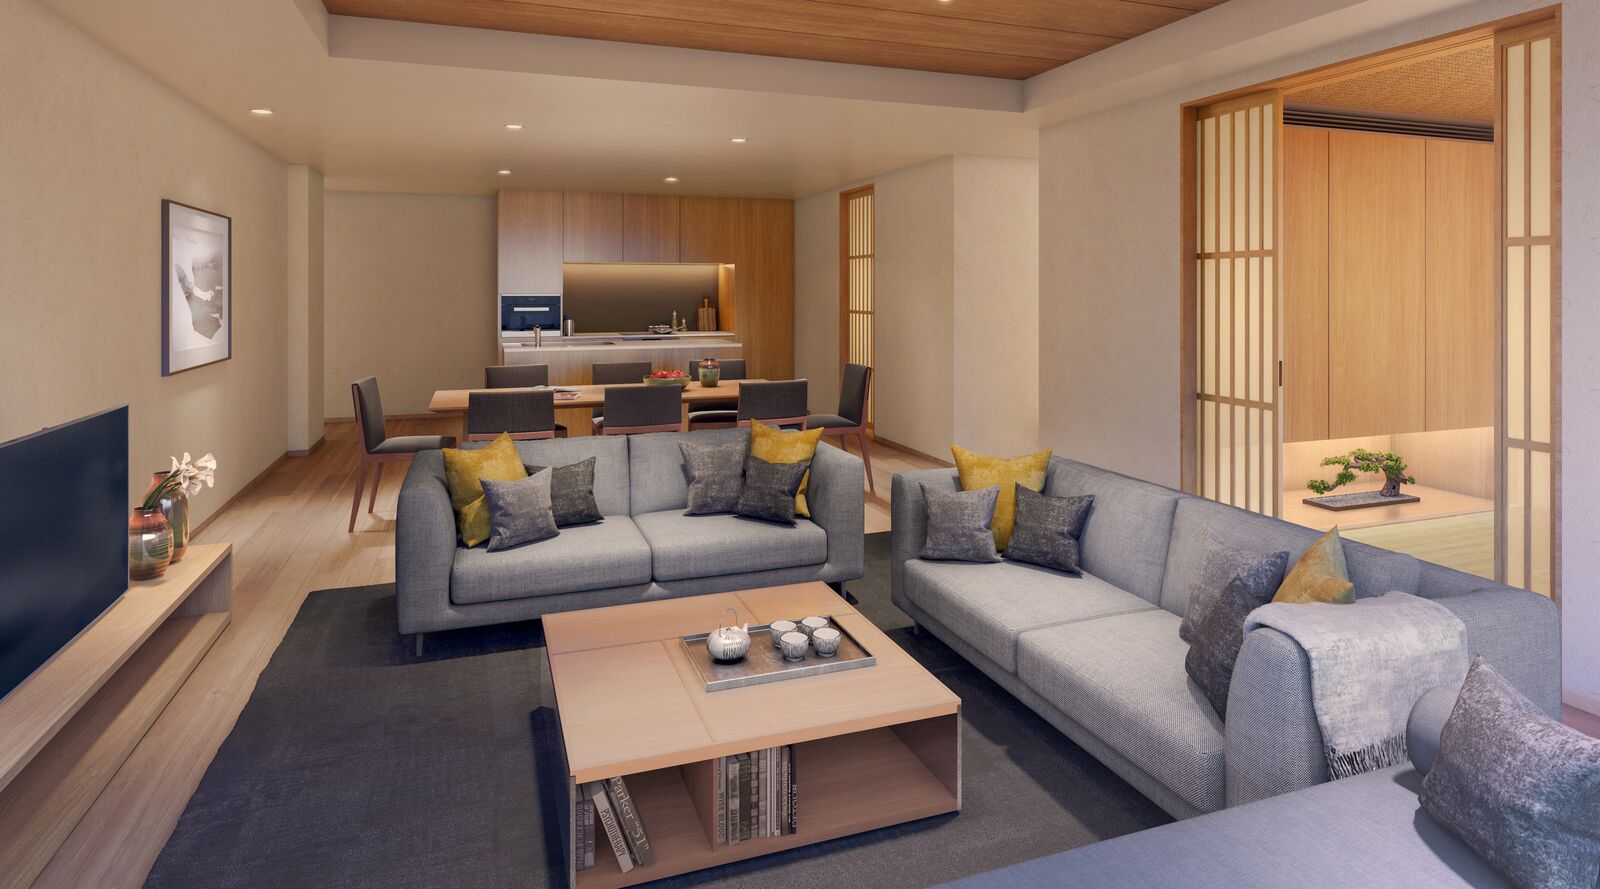 Setsu suite living room - Color edited